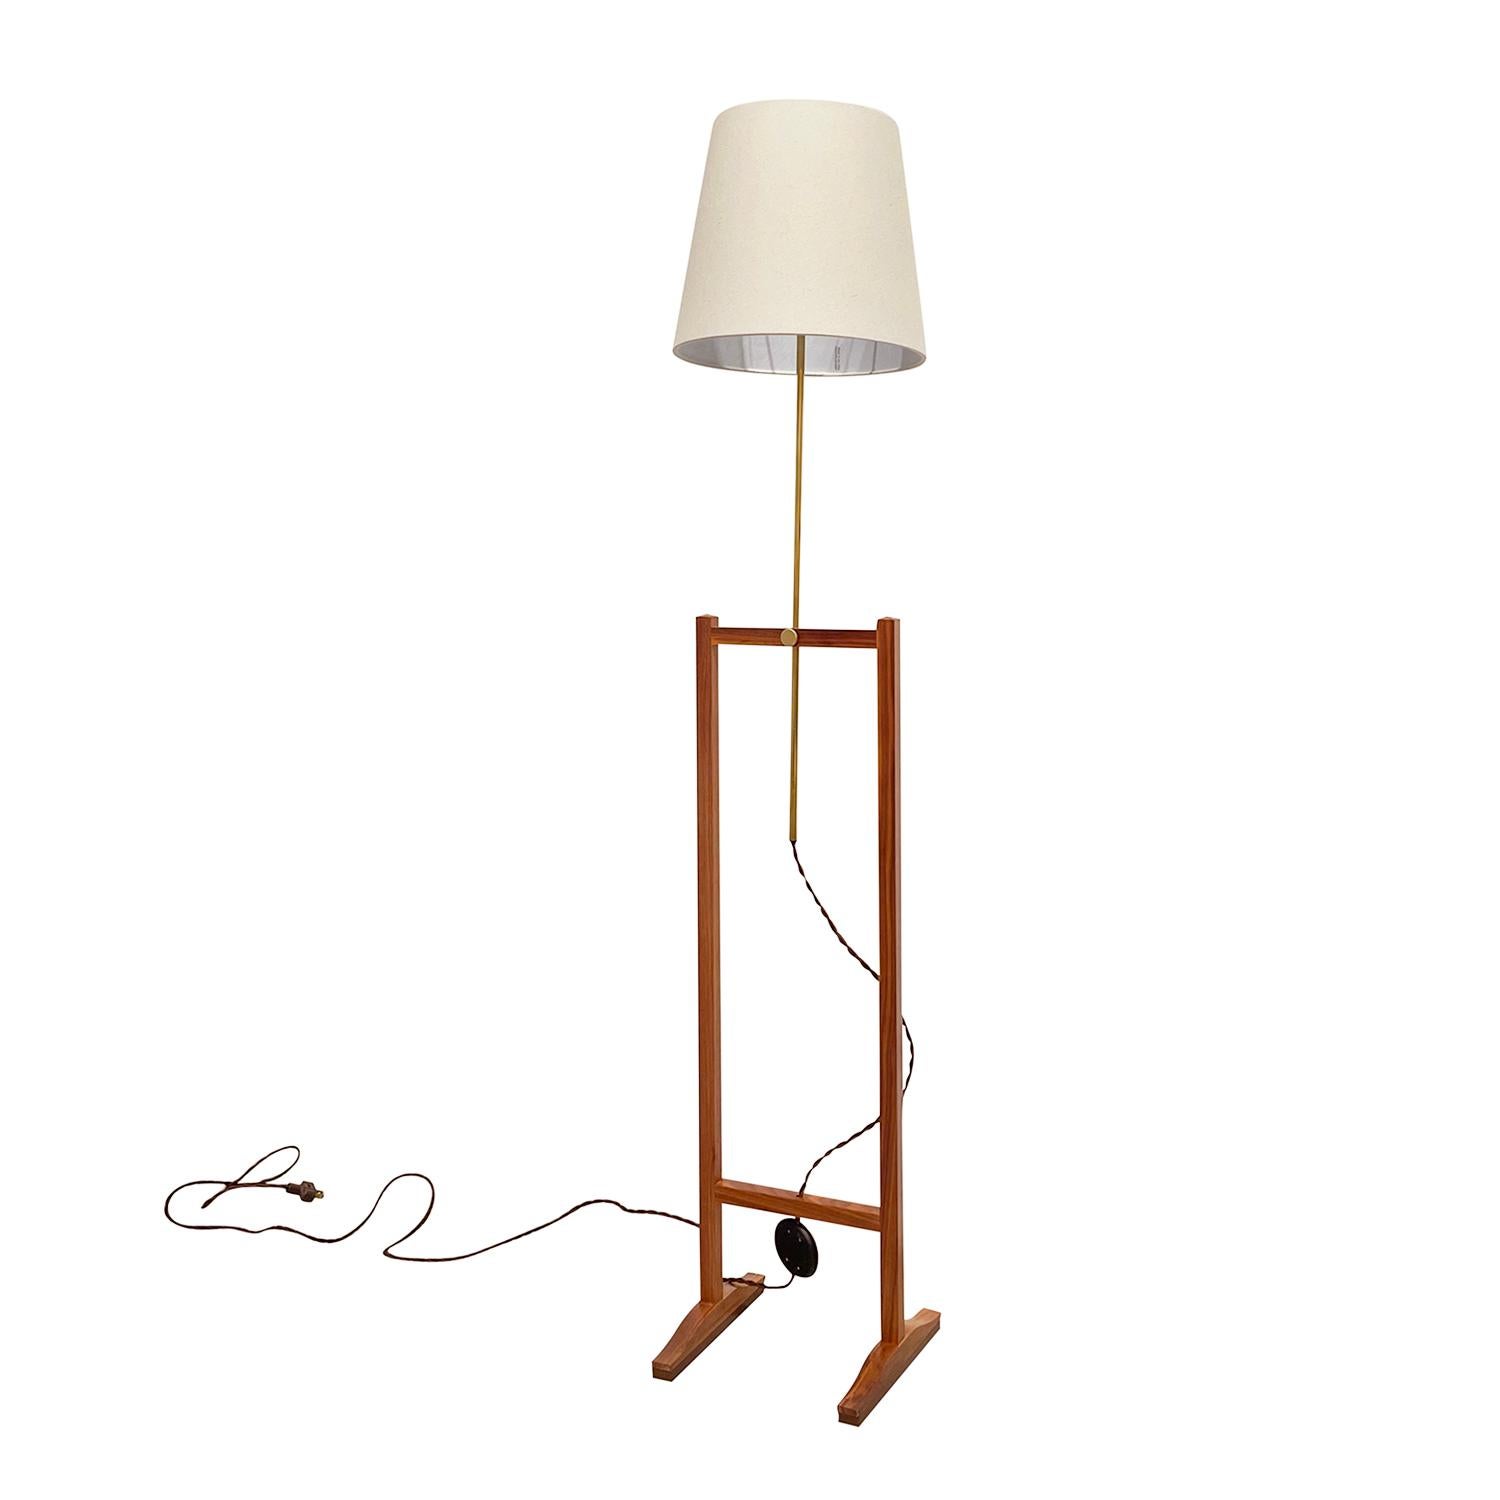 Hand-Crafted 20th Century Swedish Svenskt Tenn Walnut Floor Lamp, Brass Light by Josef Frank For Sale